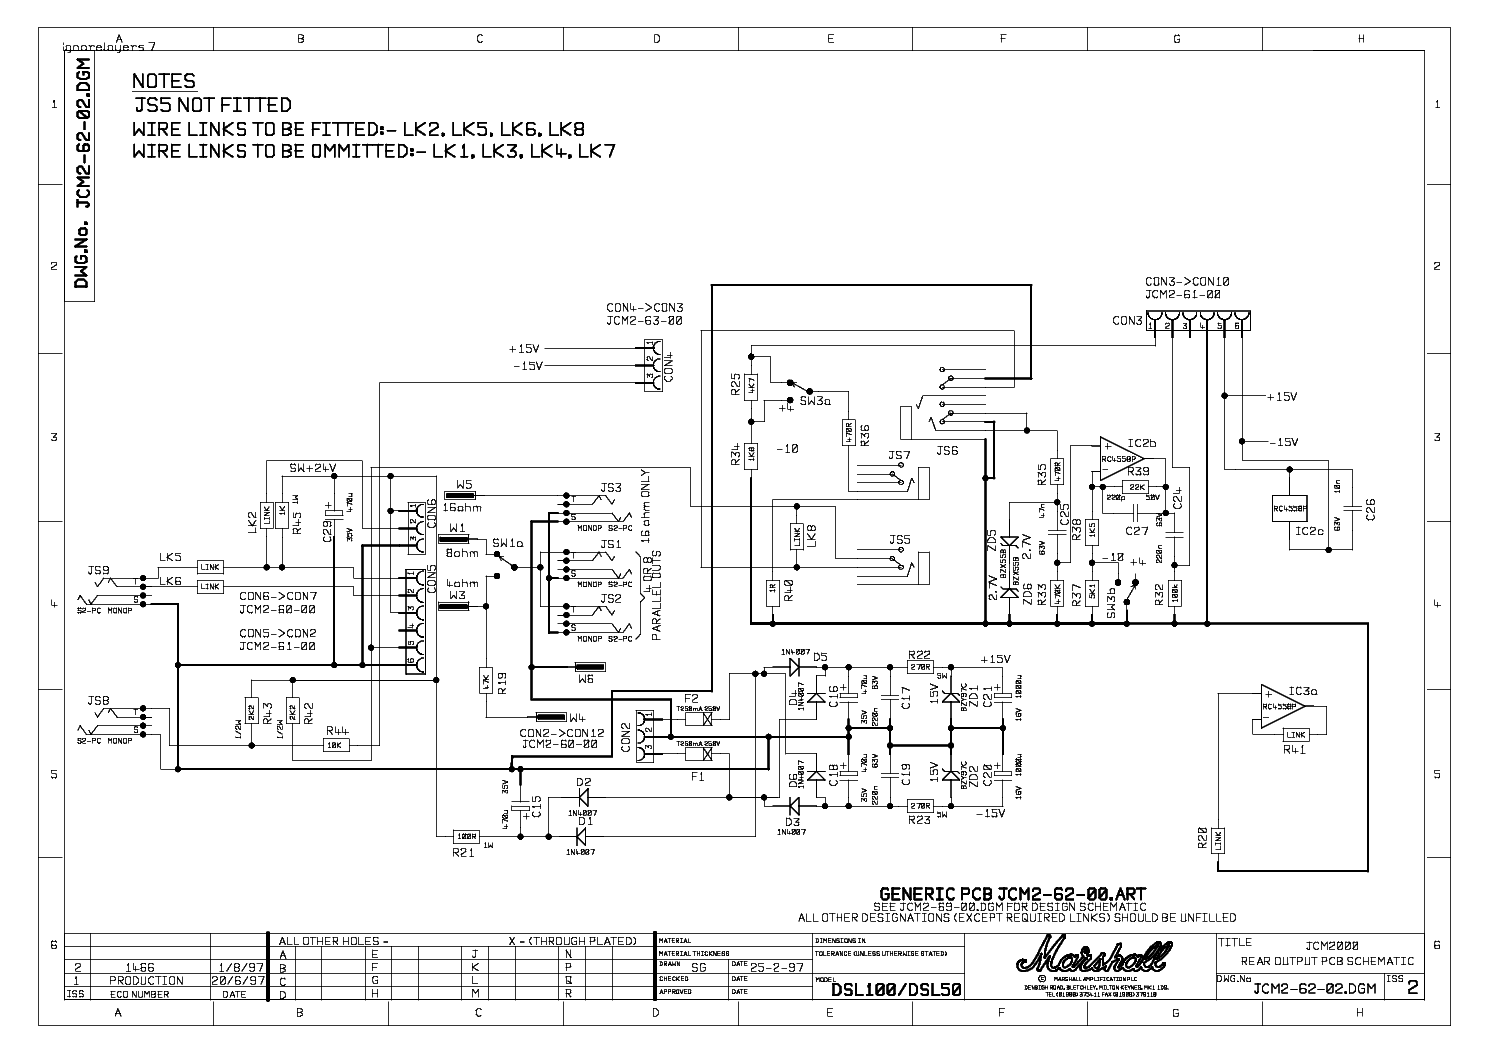 stamford sx460 wiring diagram